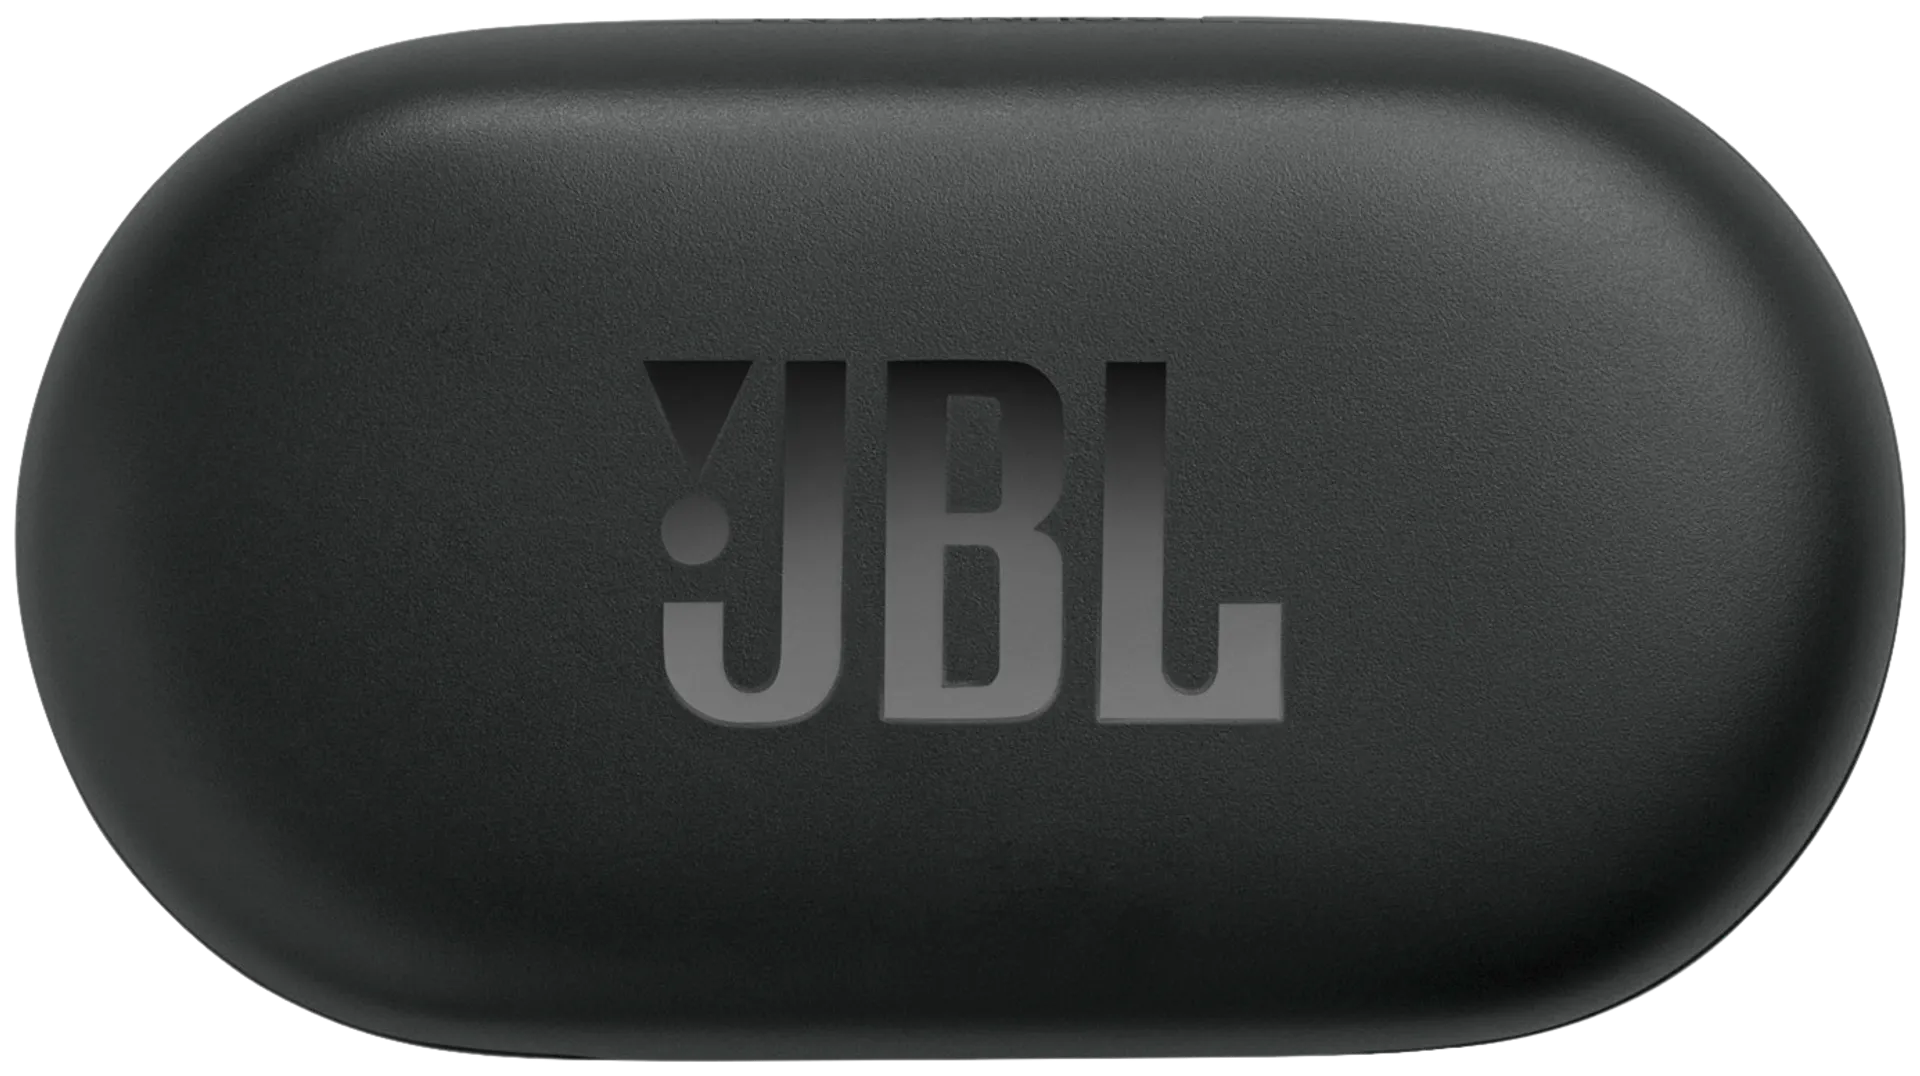 JBL Bluetooth nappikuulokkeet Soundgear Sense musta - 6